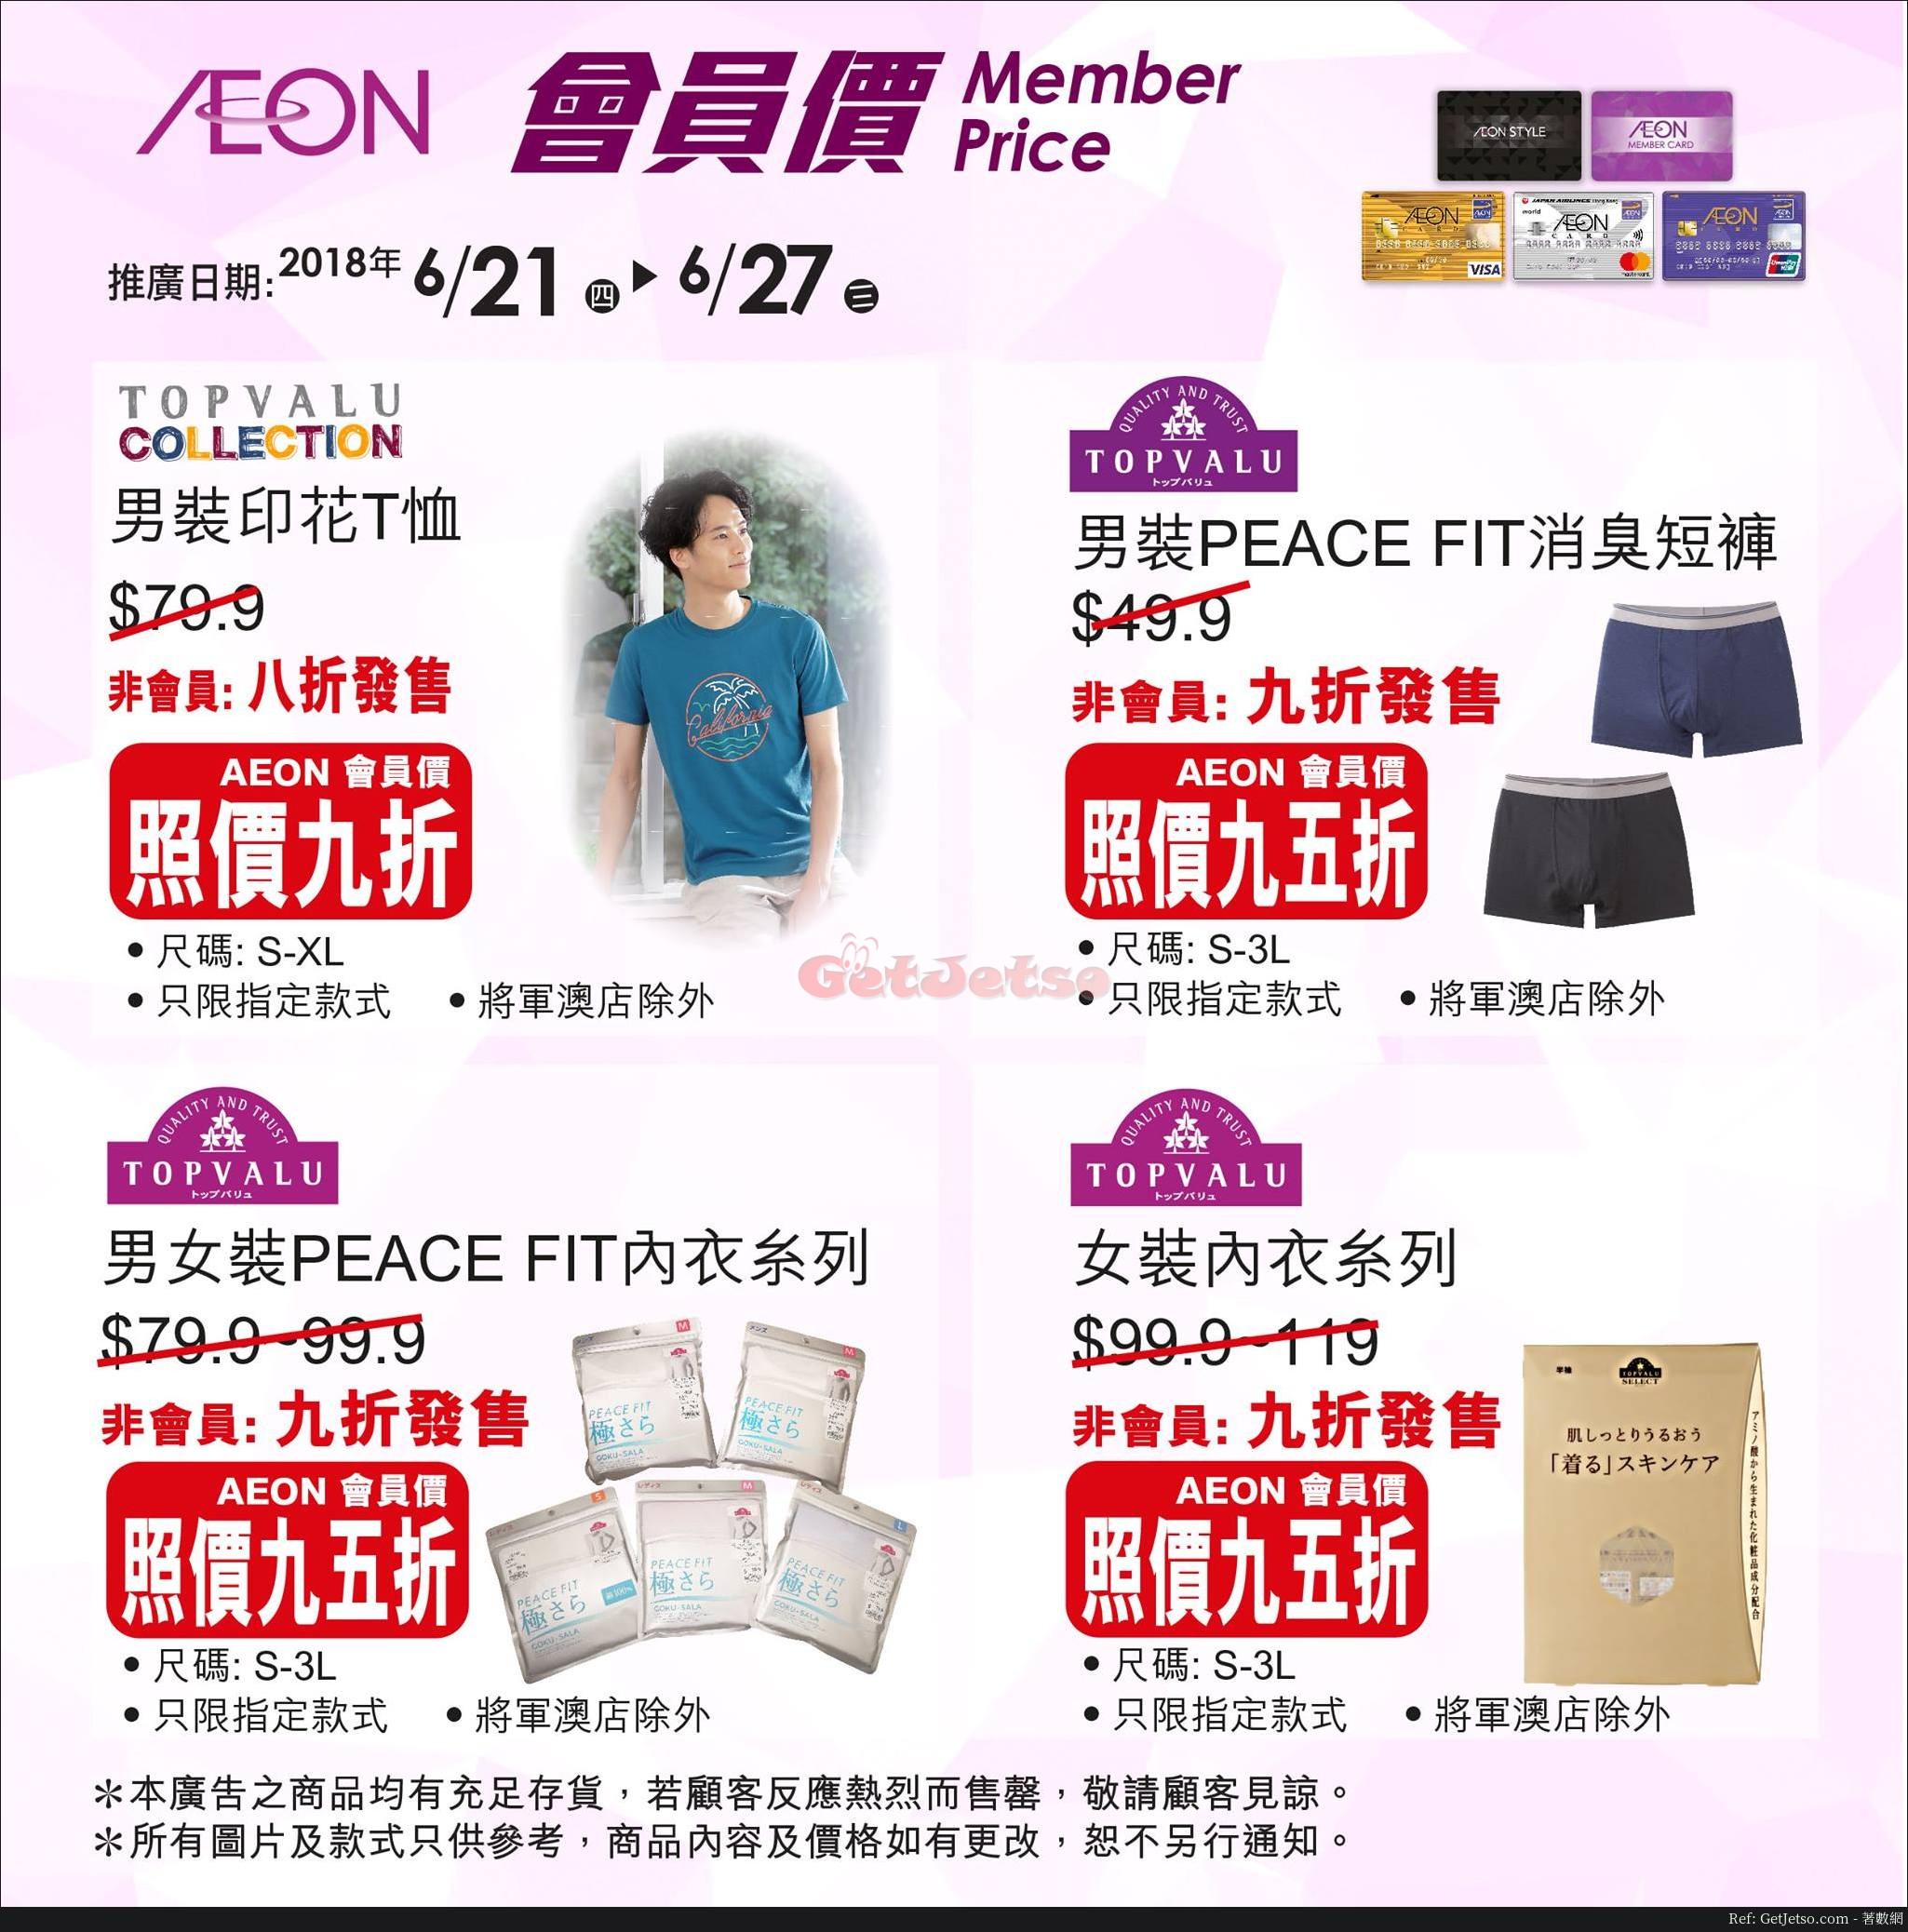 AEON 本週會員價、TOPVALU夏日巡禮優惠(至18年6月27日)圖片3